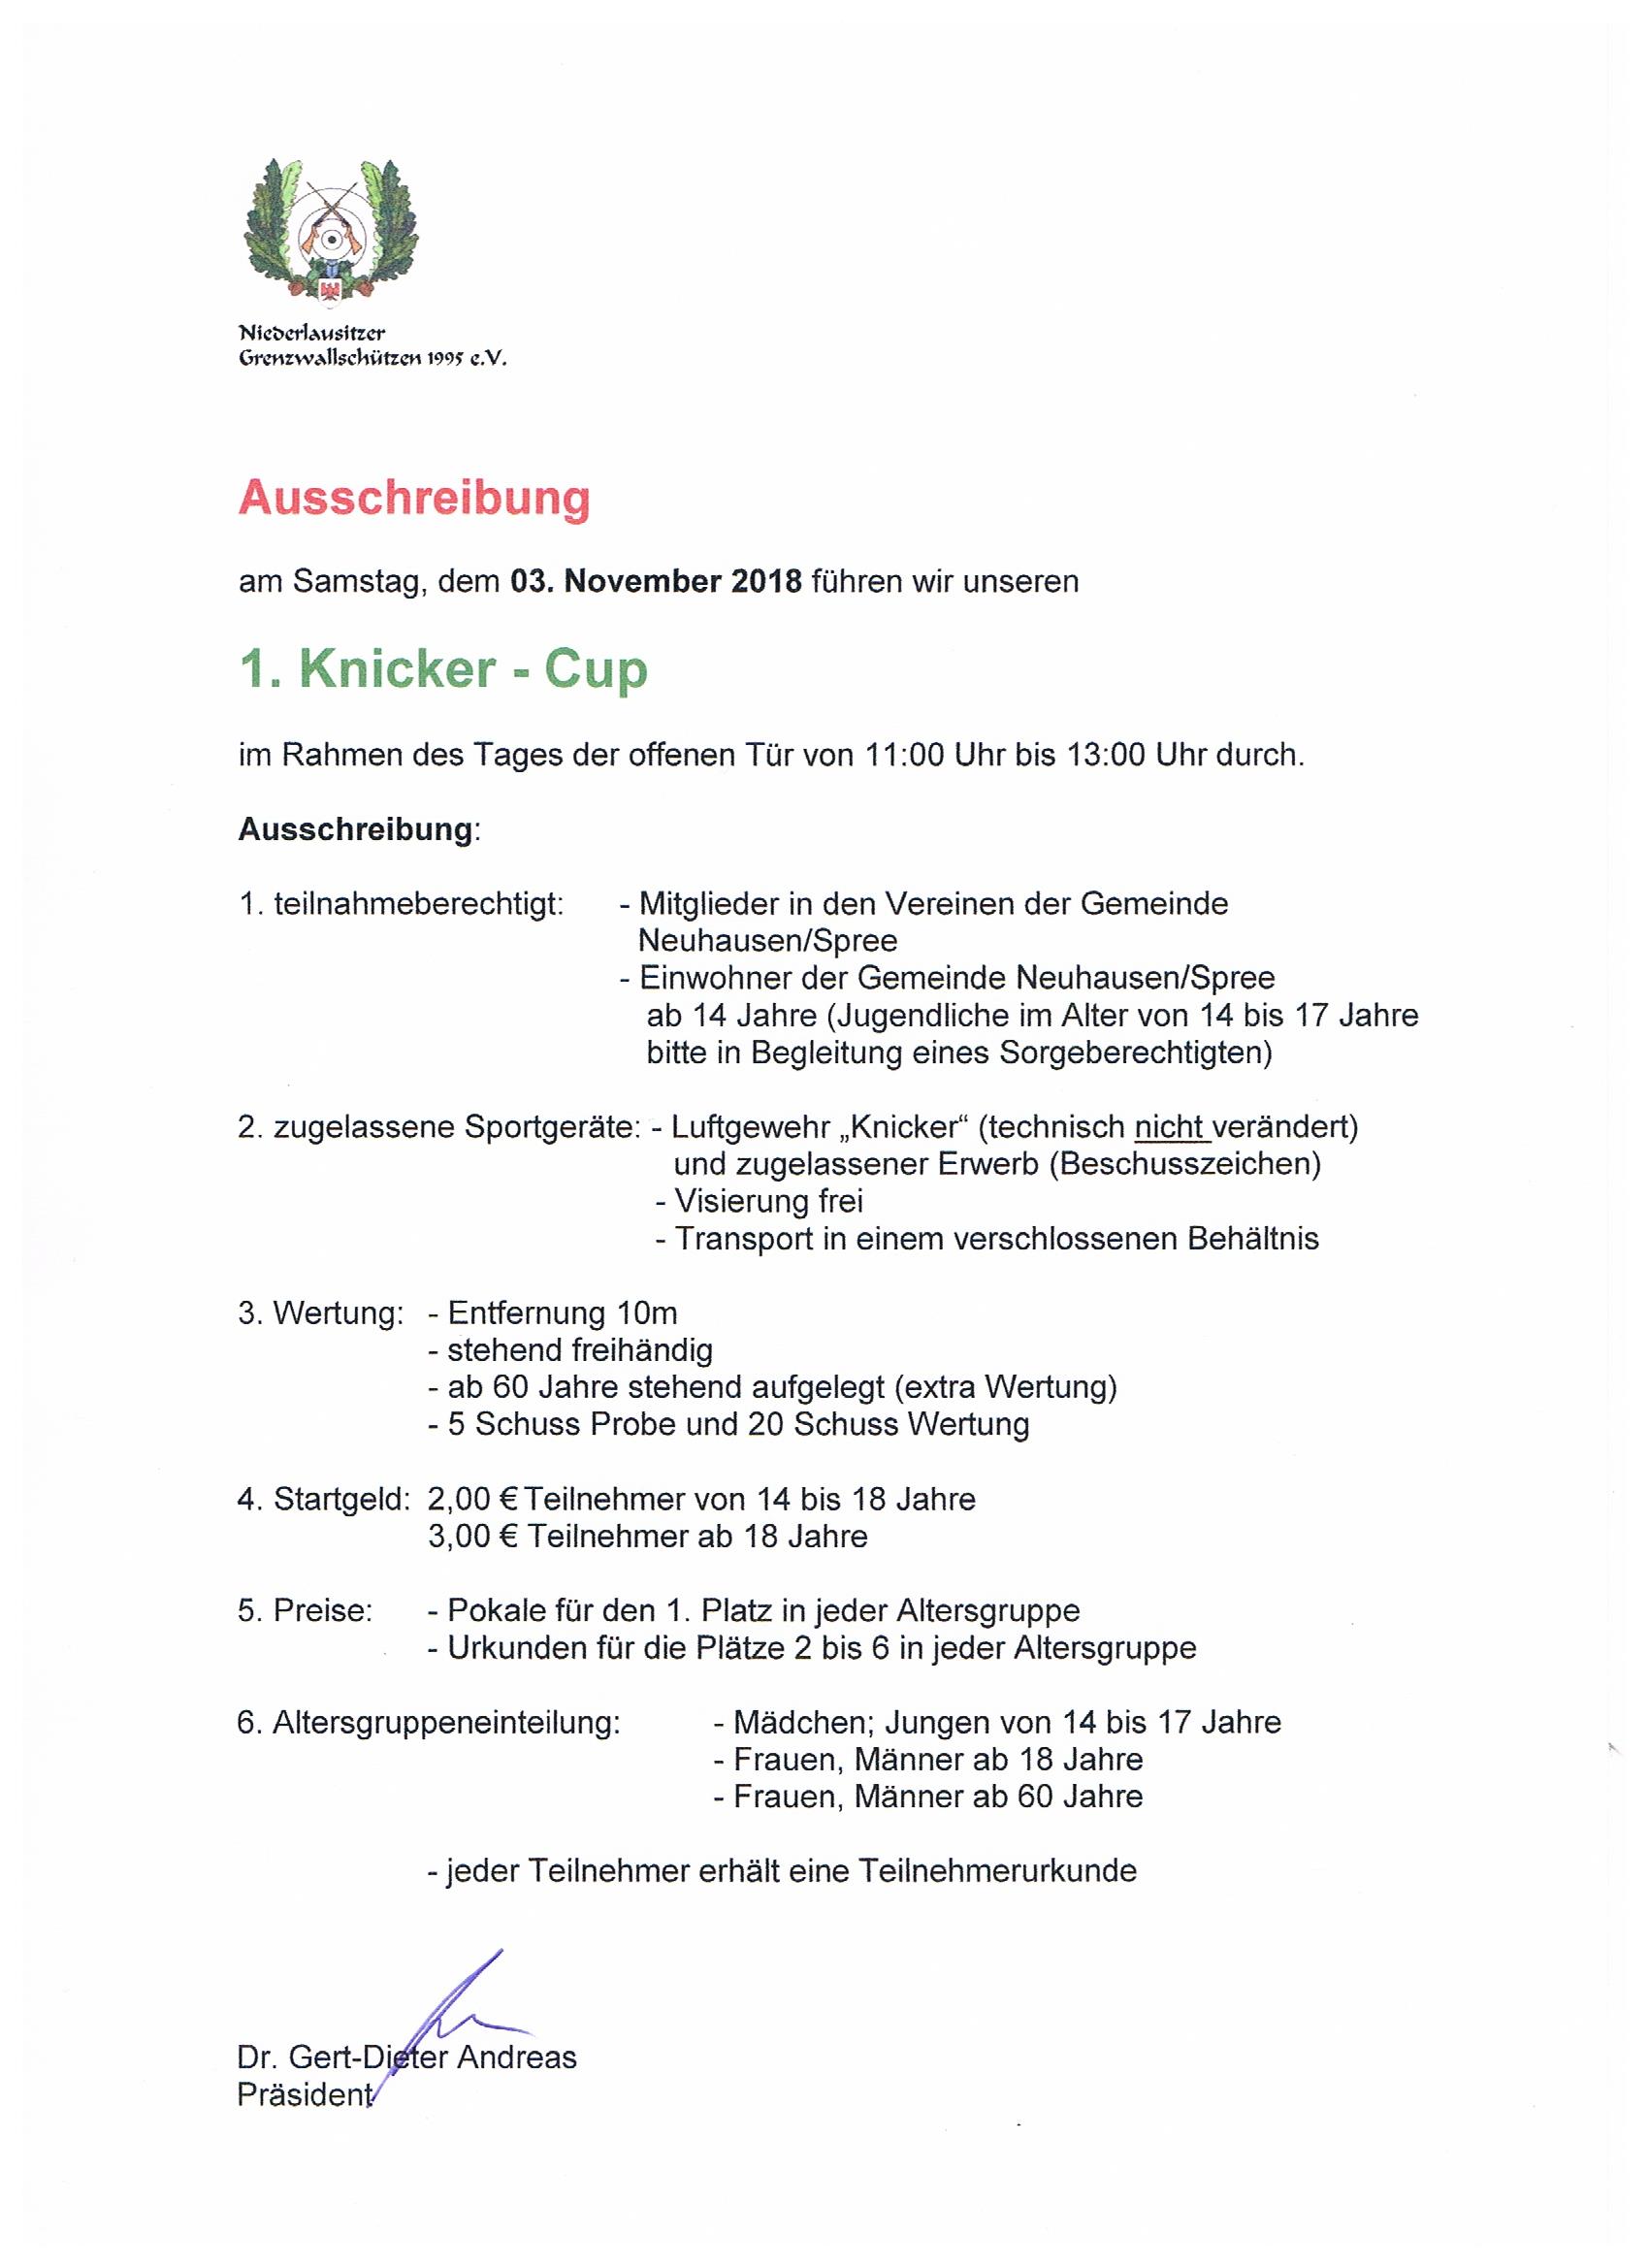 Kicker Cup 1 am 03.11.18